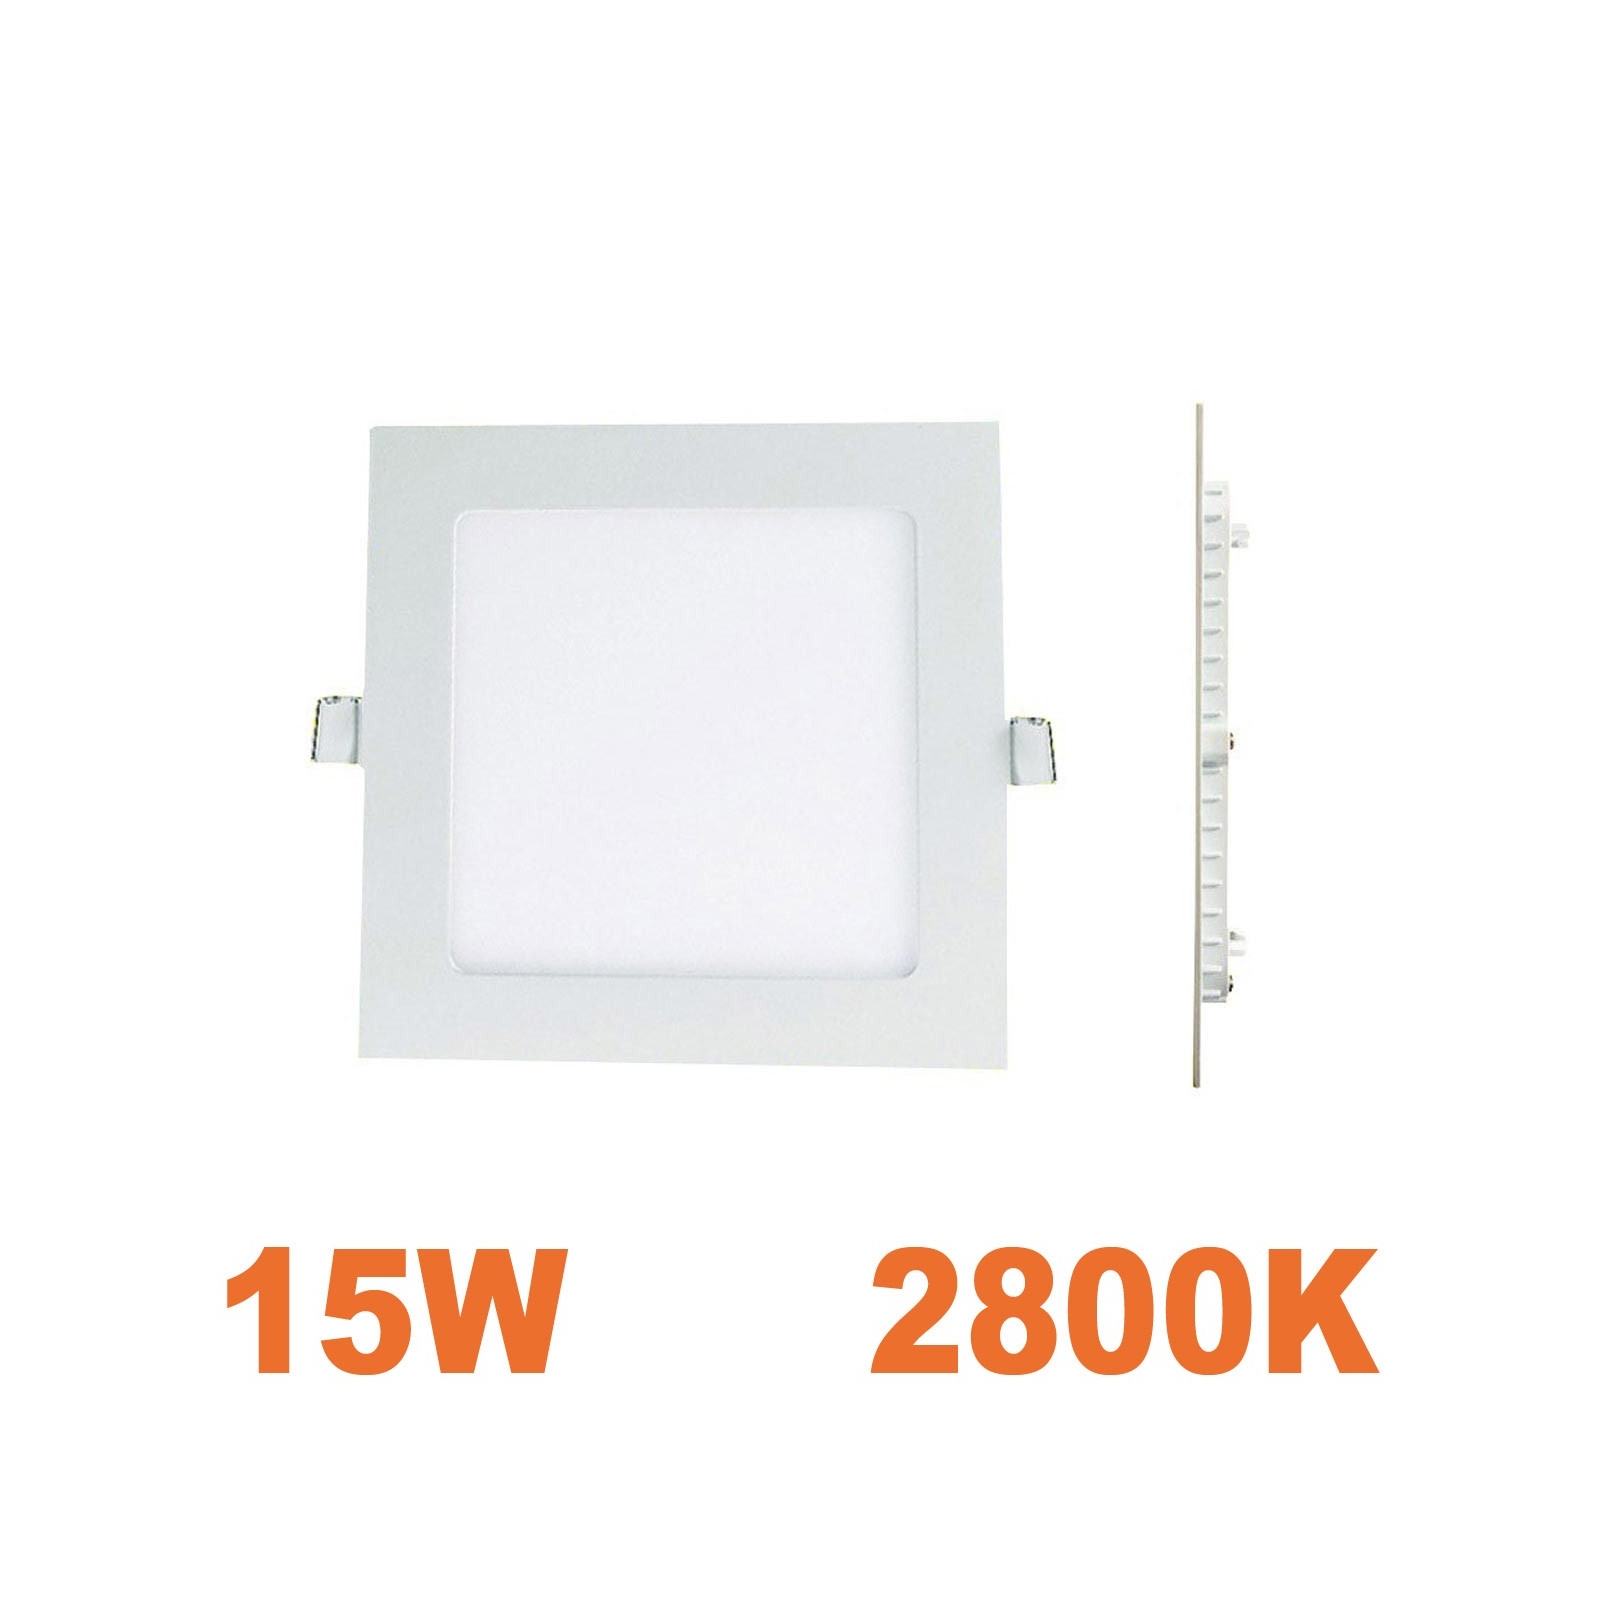 Spot Encastrable LED Carre Downlight Panel Extra-Plat 15W Blanc Chaud 3000k  - EuropaLamp